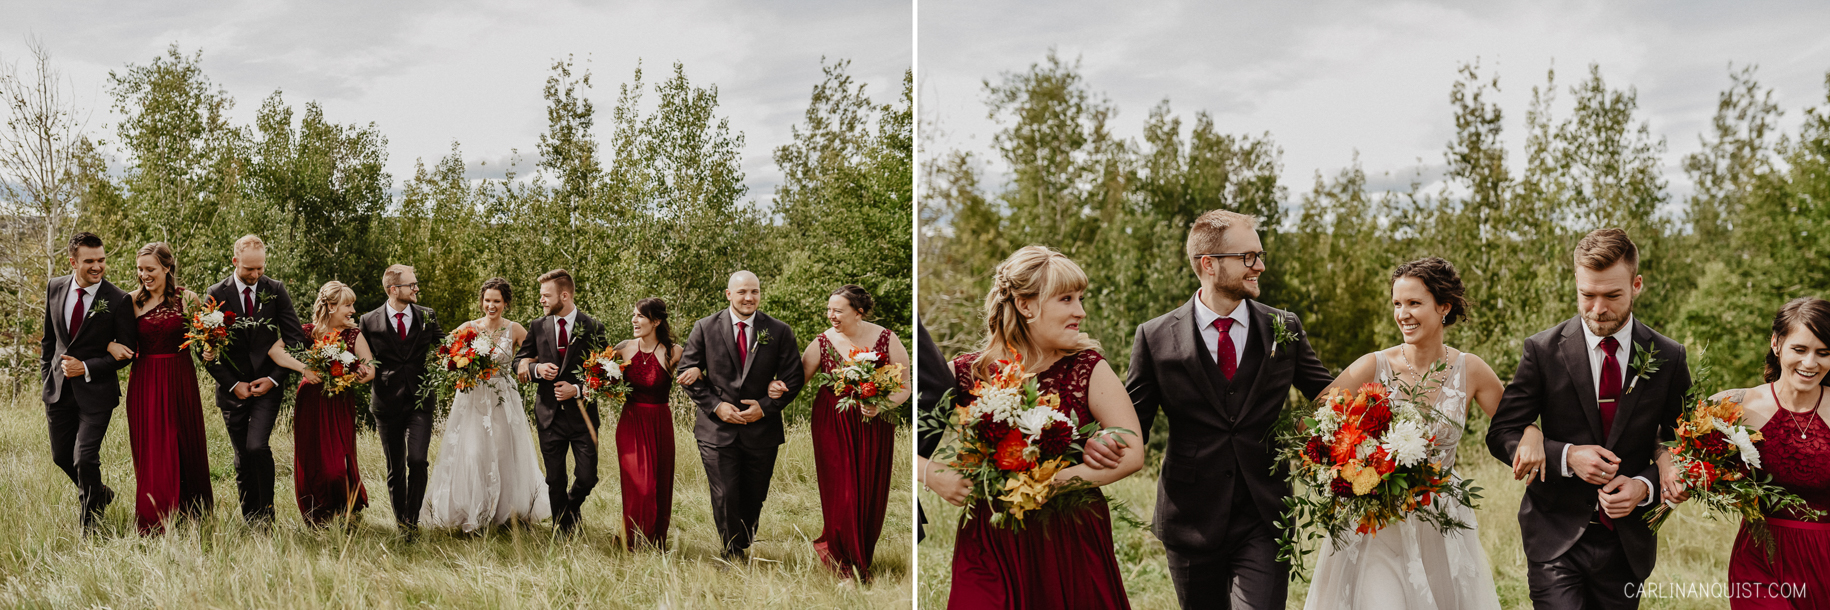 Bridal Party Walking | Calgary Wedding Photographers